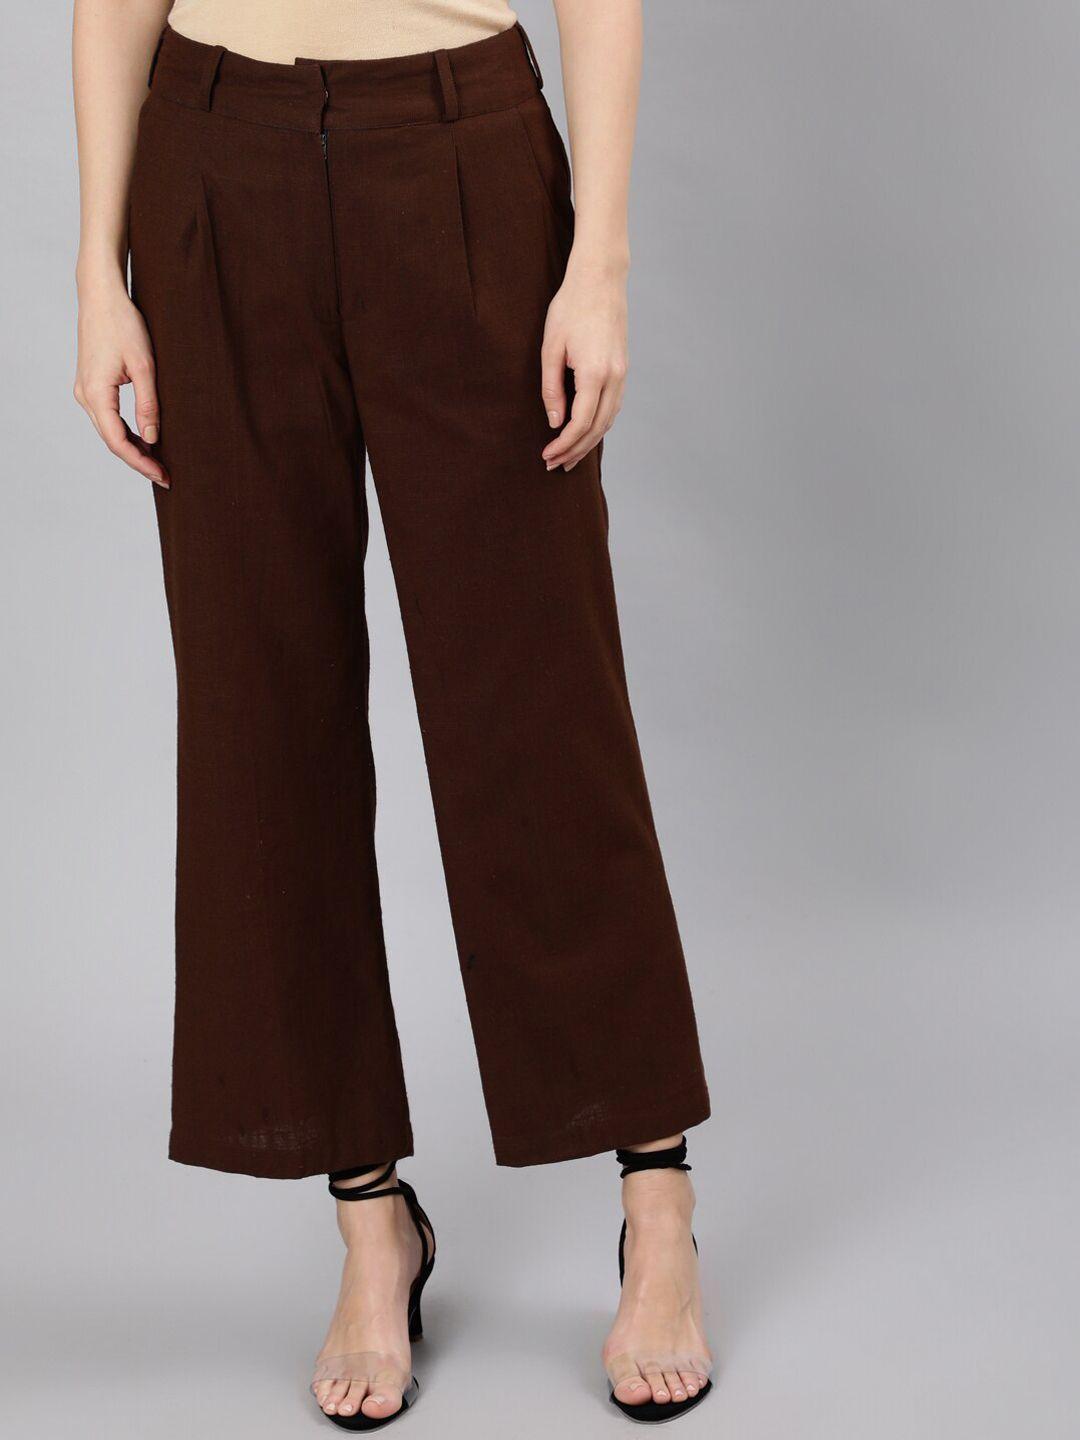 jaipur-kurti-women-brown-flared-high-rise-pleated-trousers